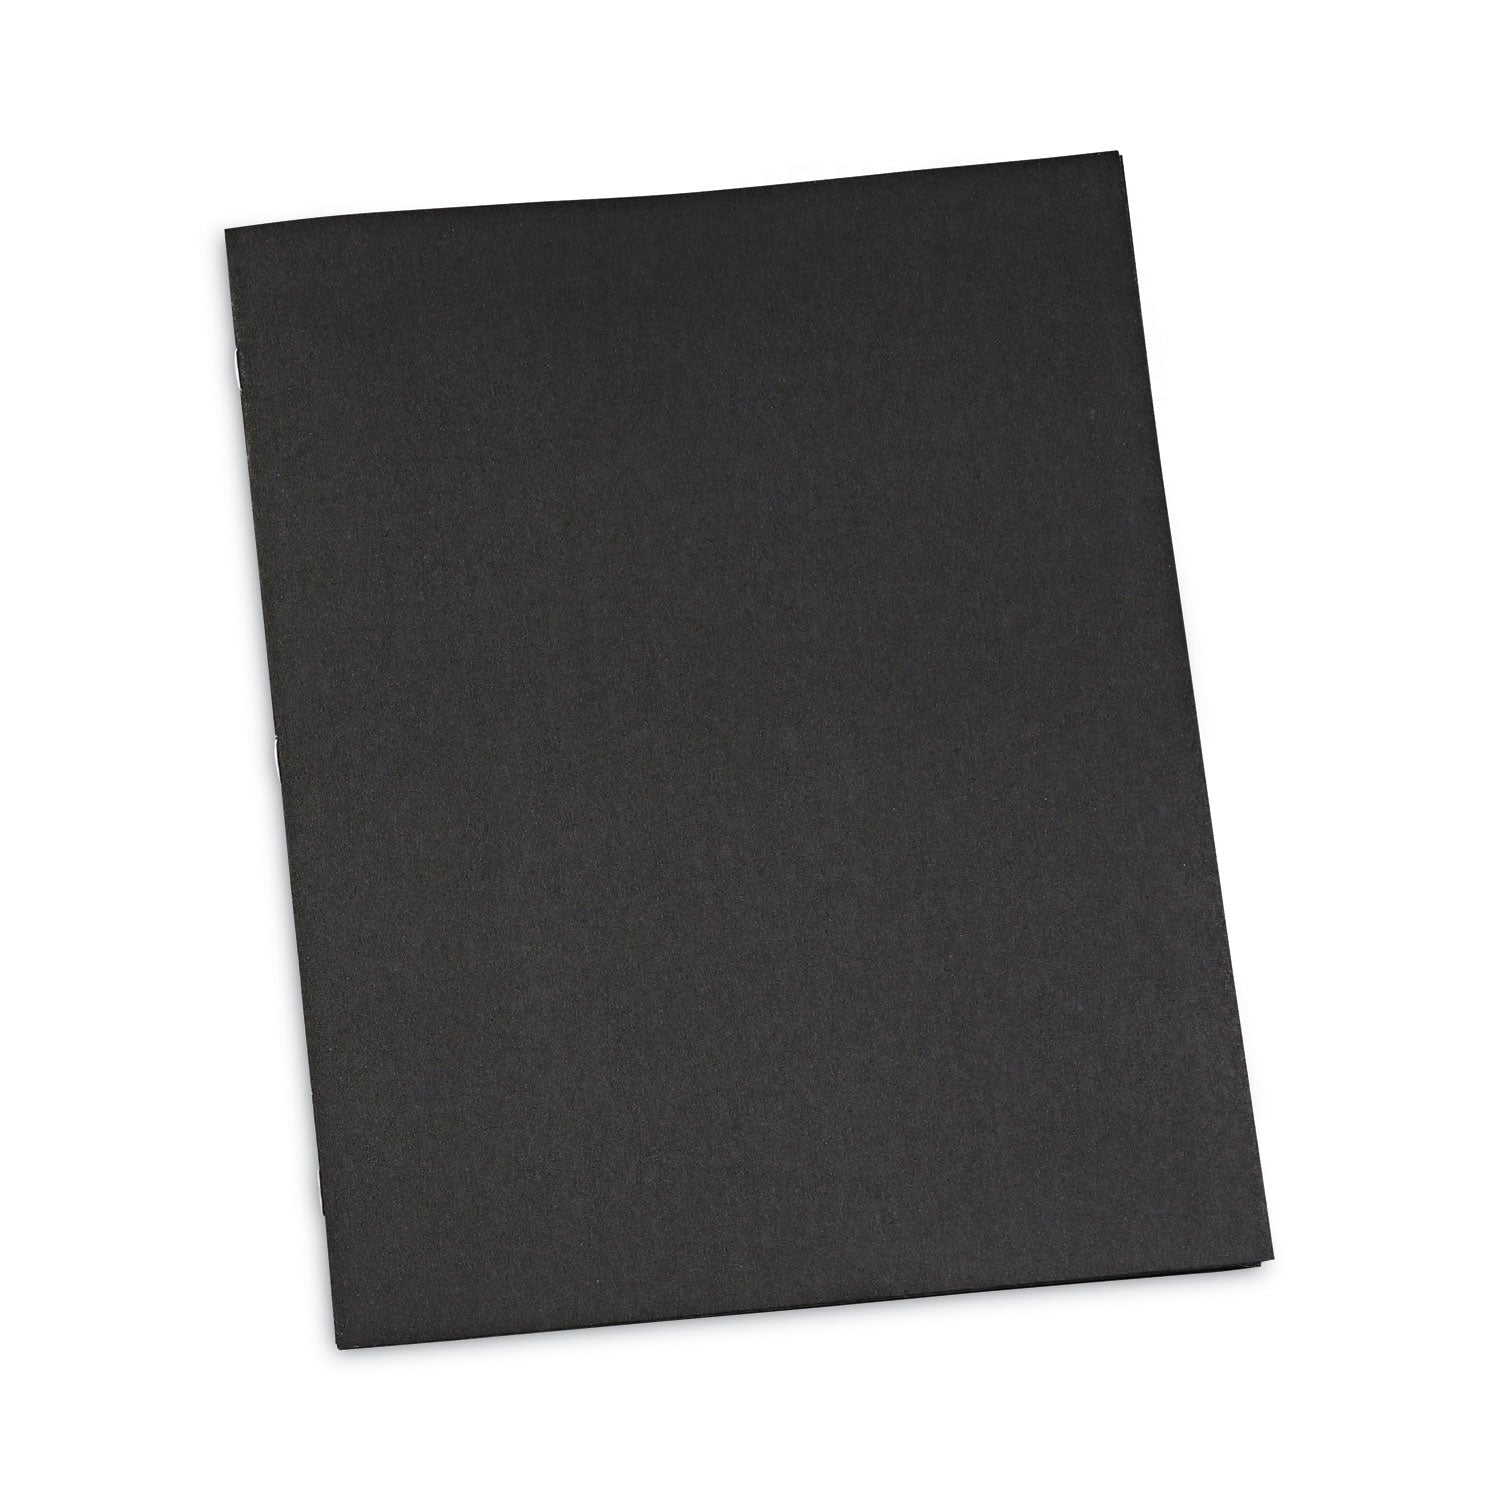 Two-Pocket Portfolios with Tang Fasteners, 0.5" Capacity, 11 x 8.5, Black, 25/Box - 